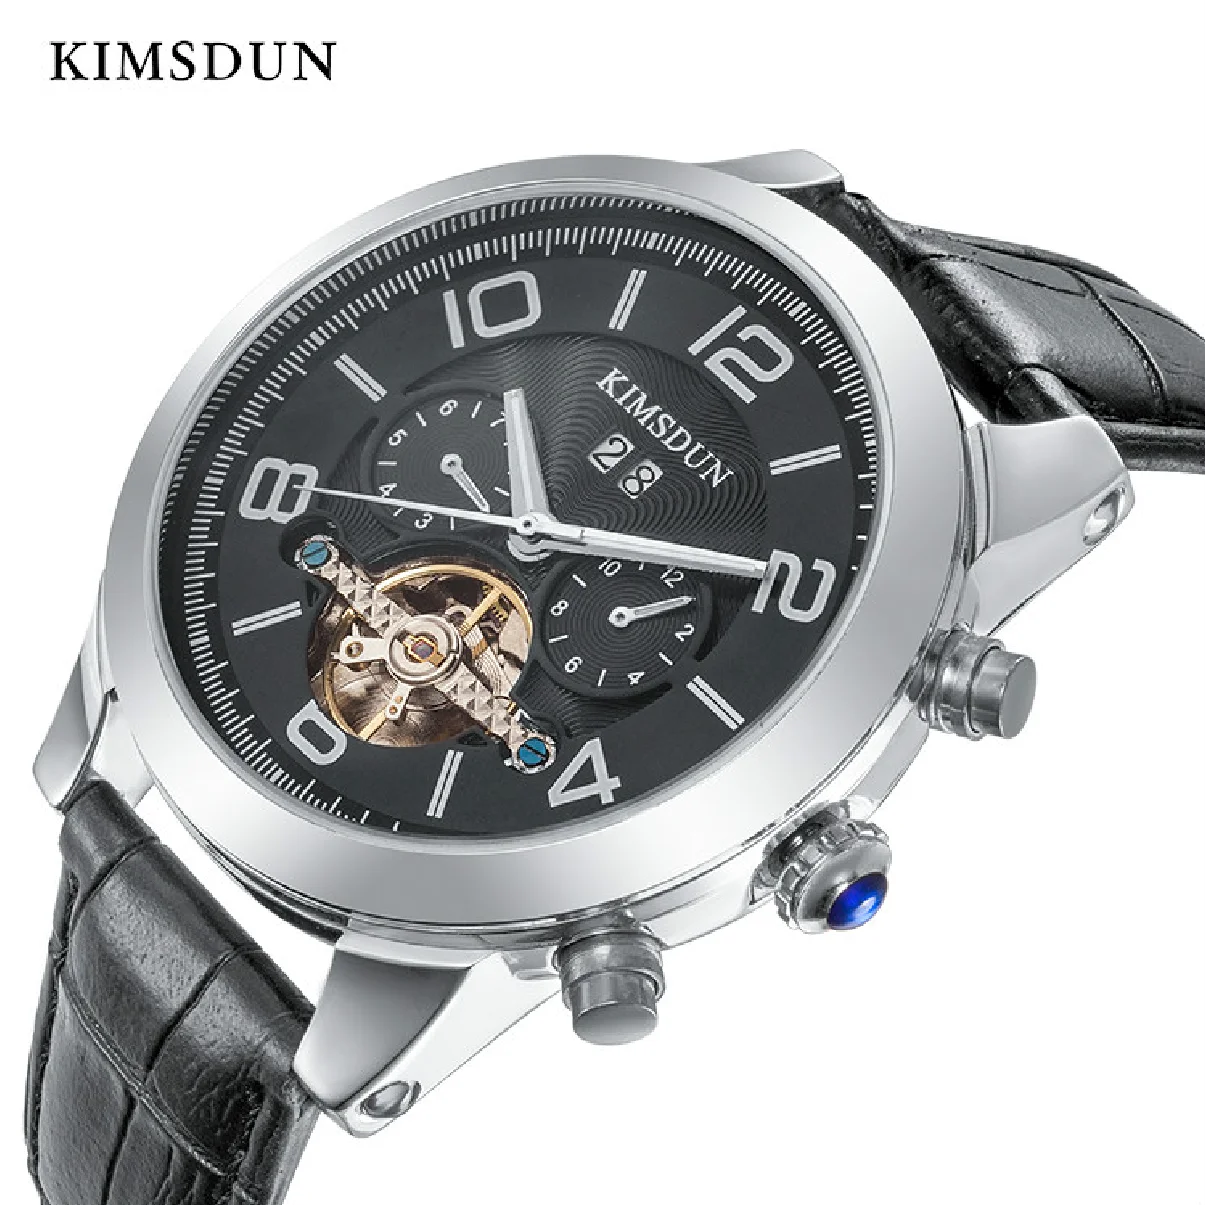 

2019 Men's automatic mechanical watch KIMSDUN brand luxury fashion tourbillon leather strap military clock date display Relogio